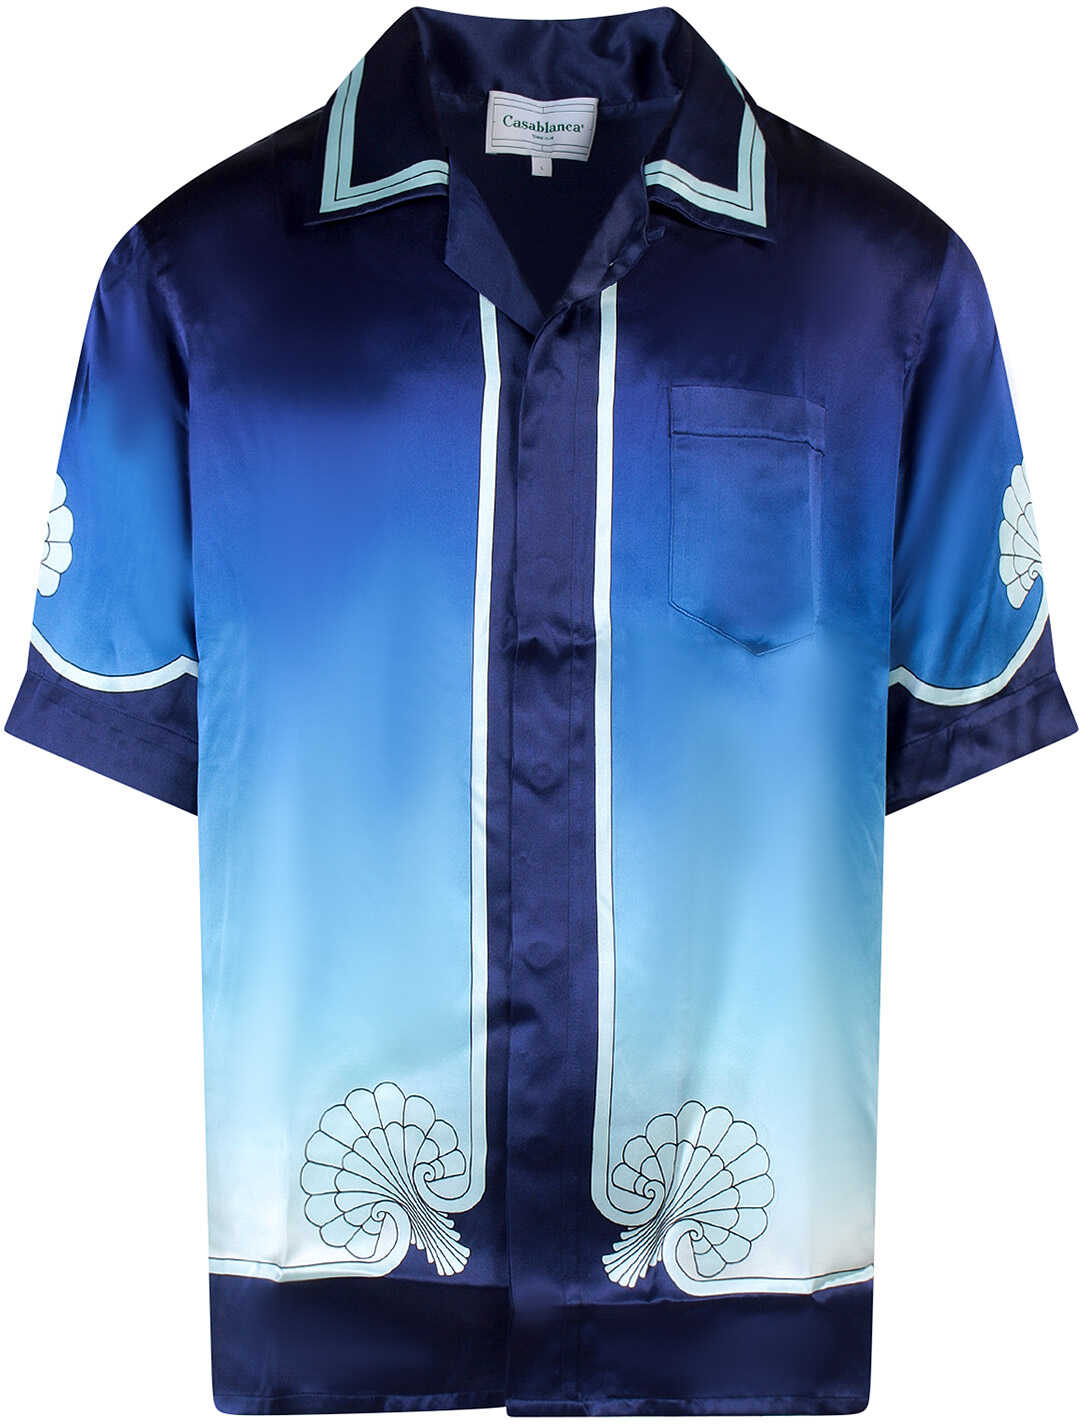 Casablanca Shirt Blue image0